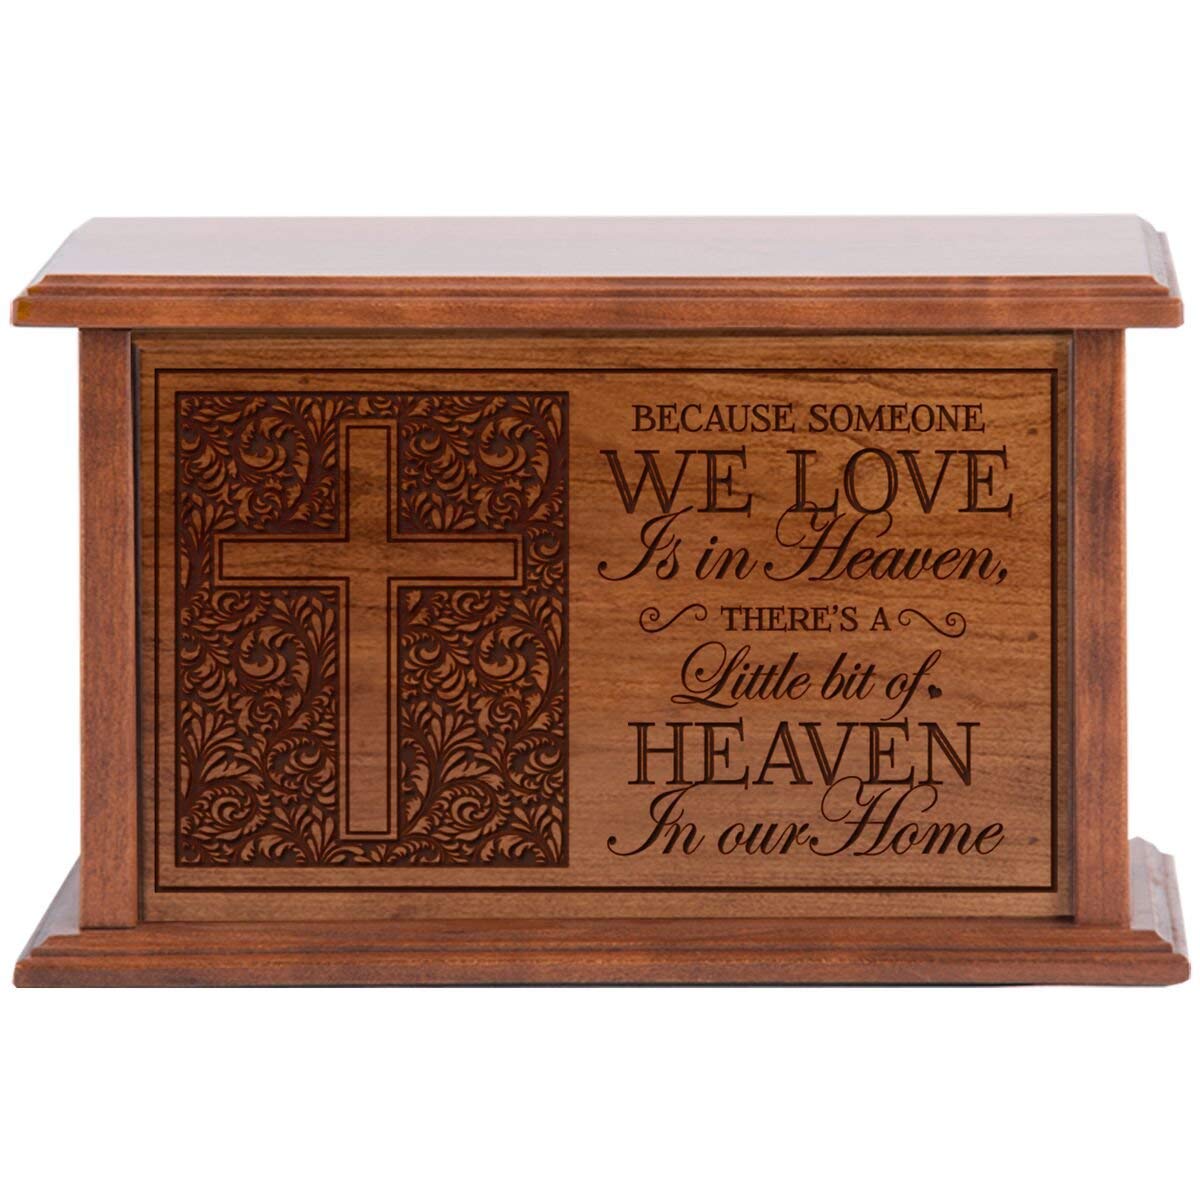 Memorial Engraved Cremation Urn Box 